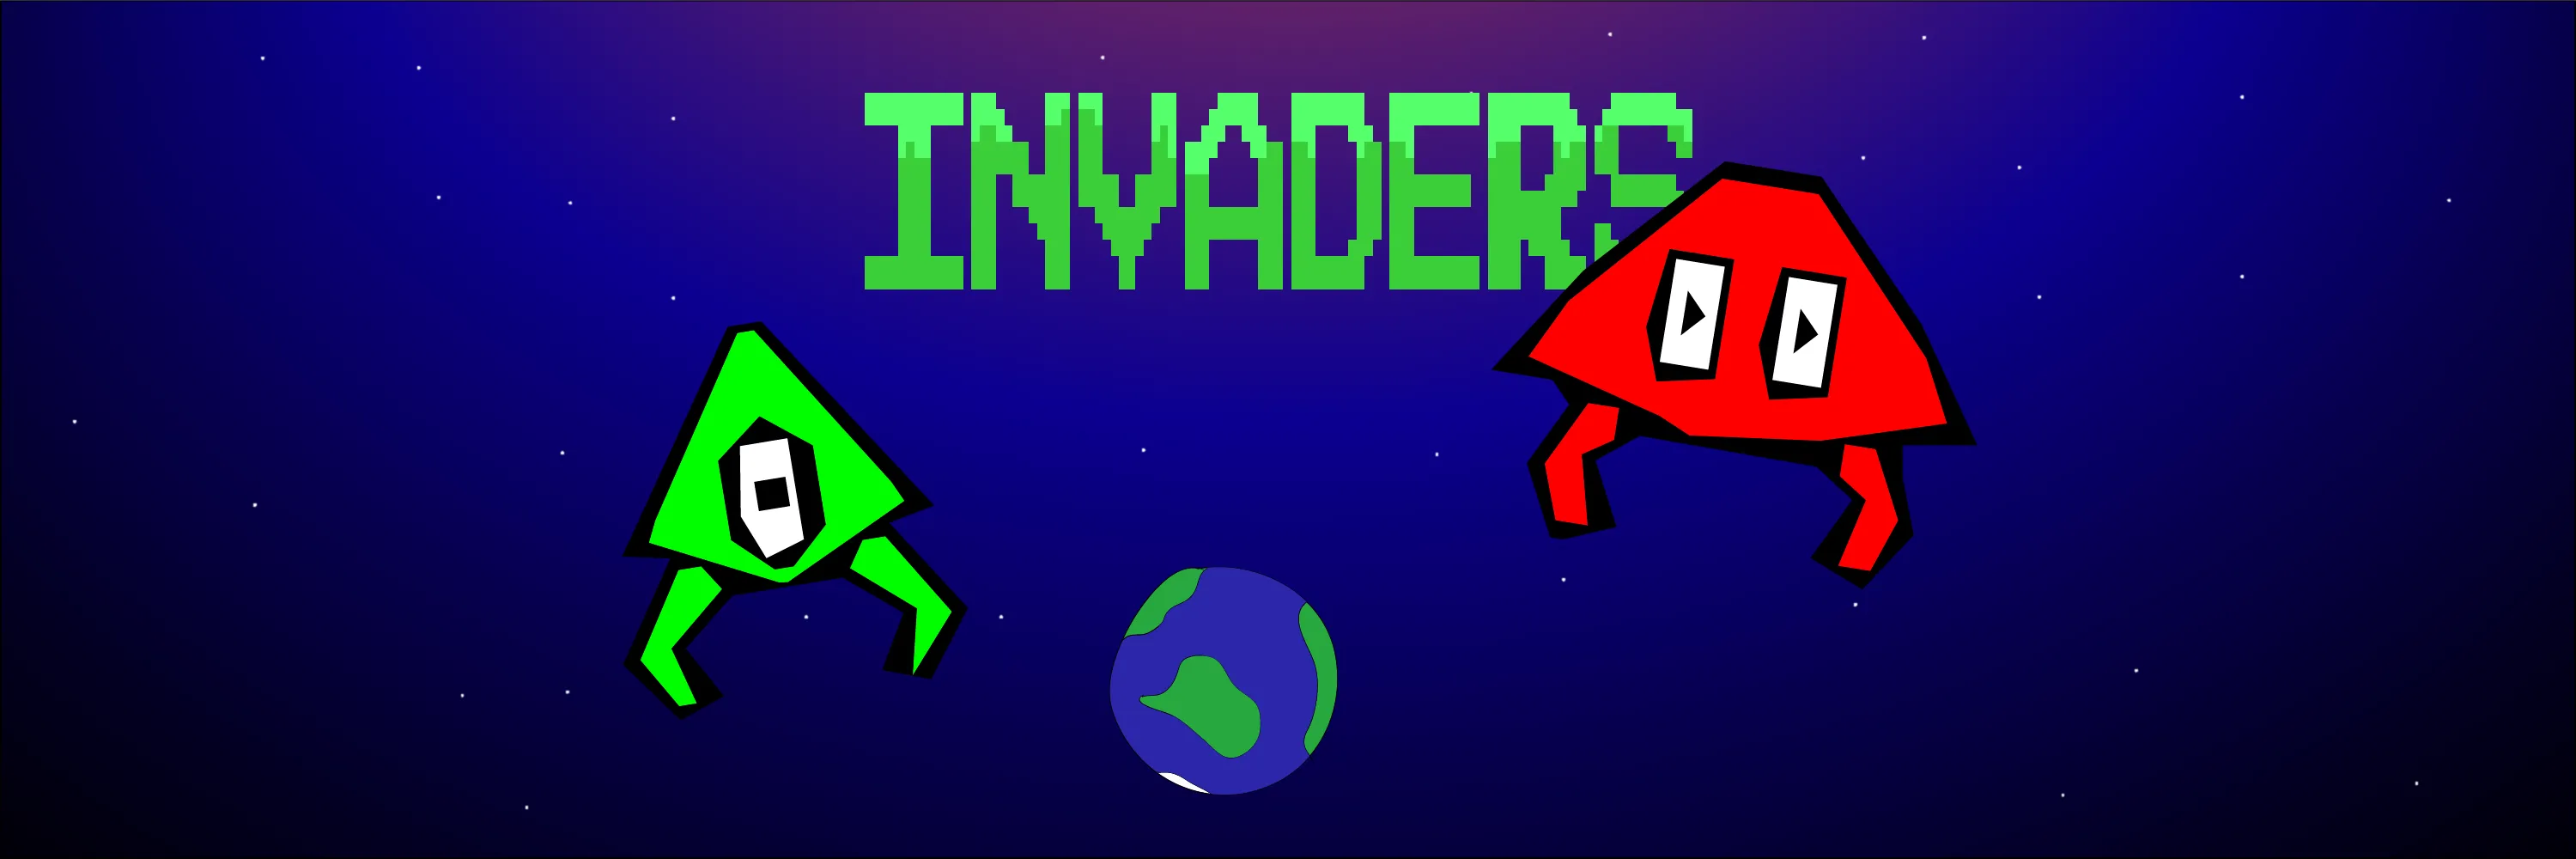 invaders promo banner